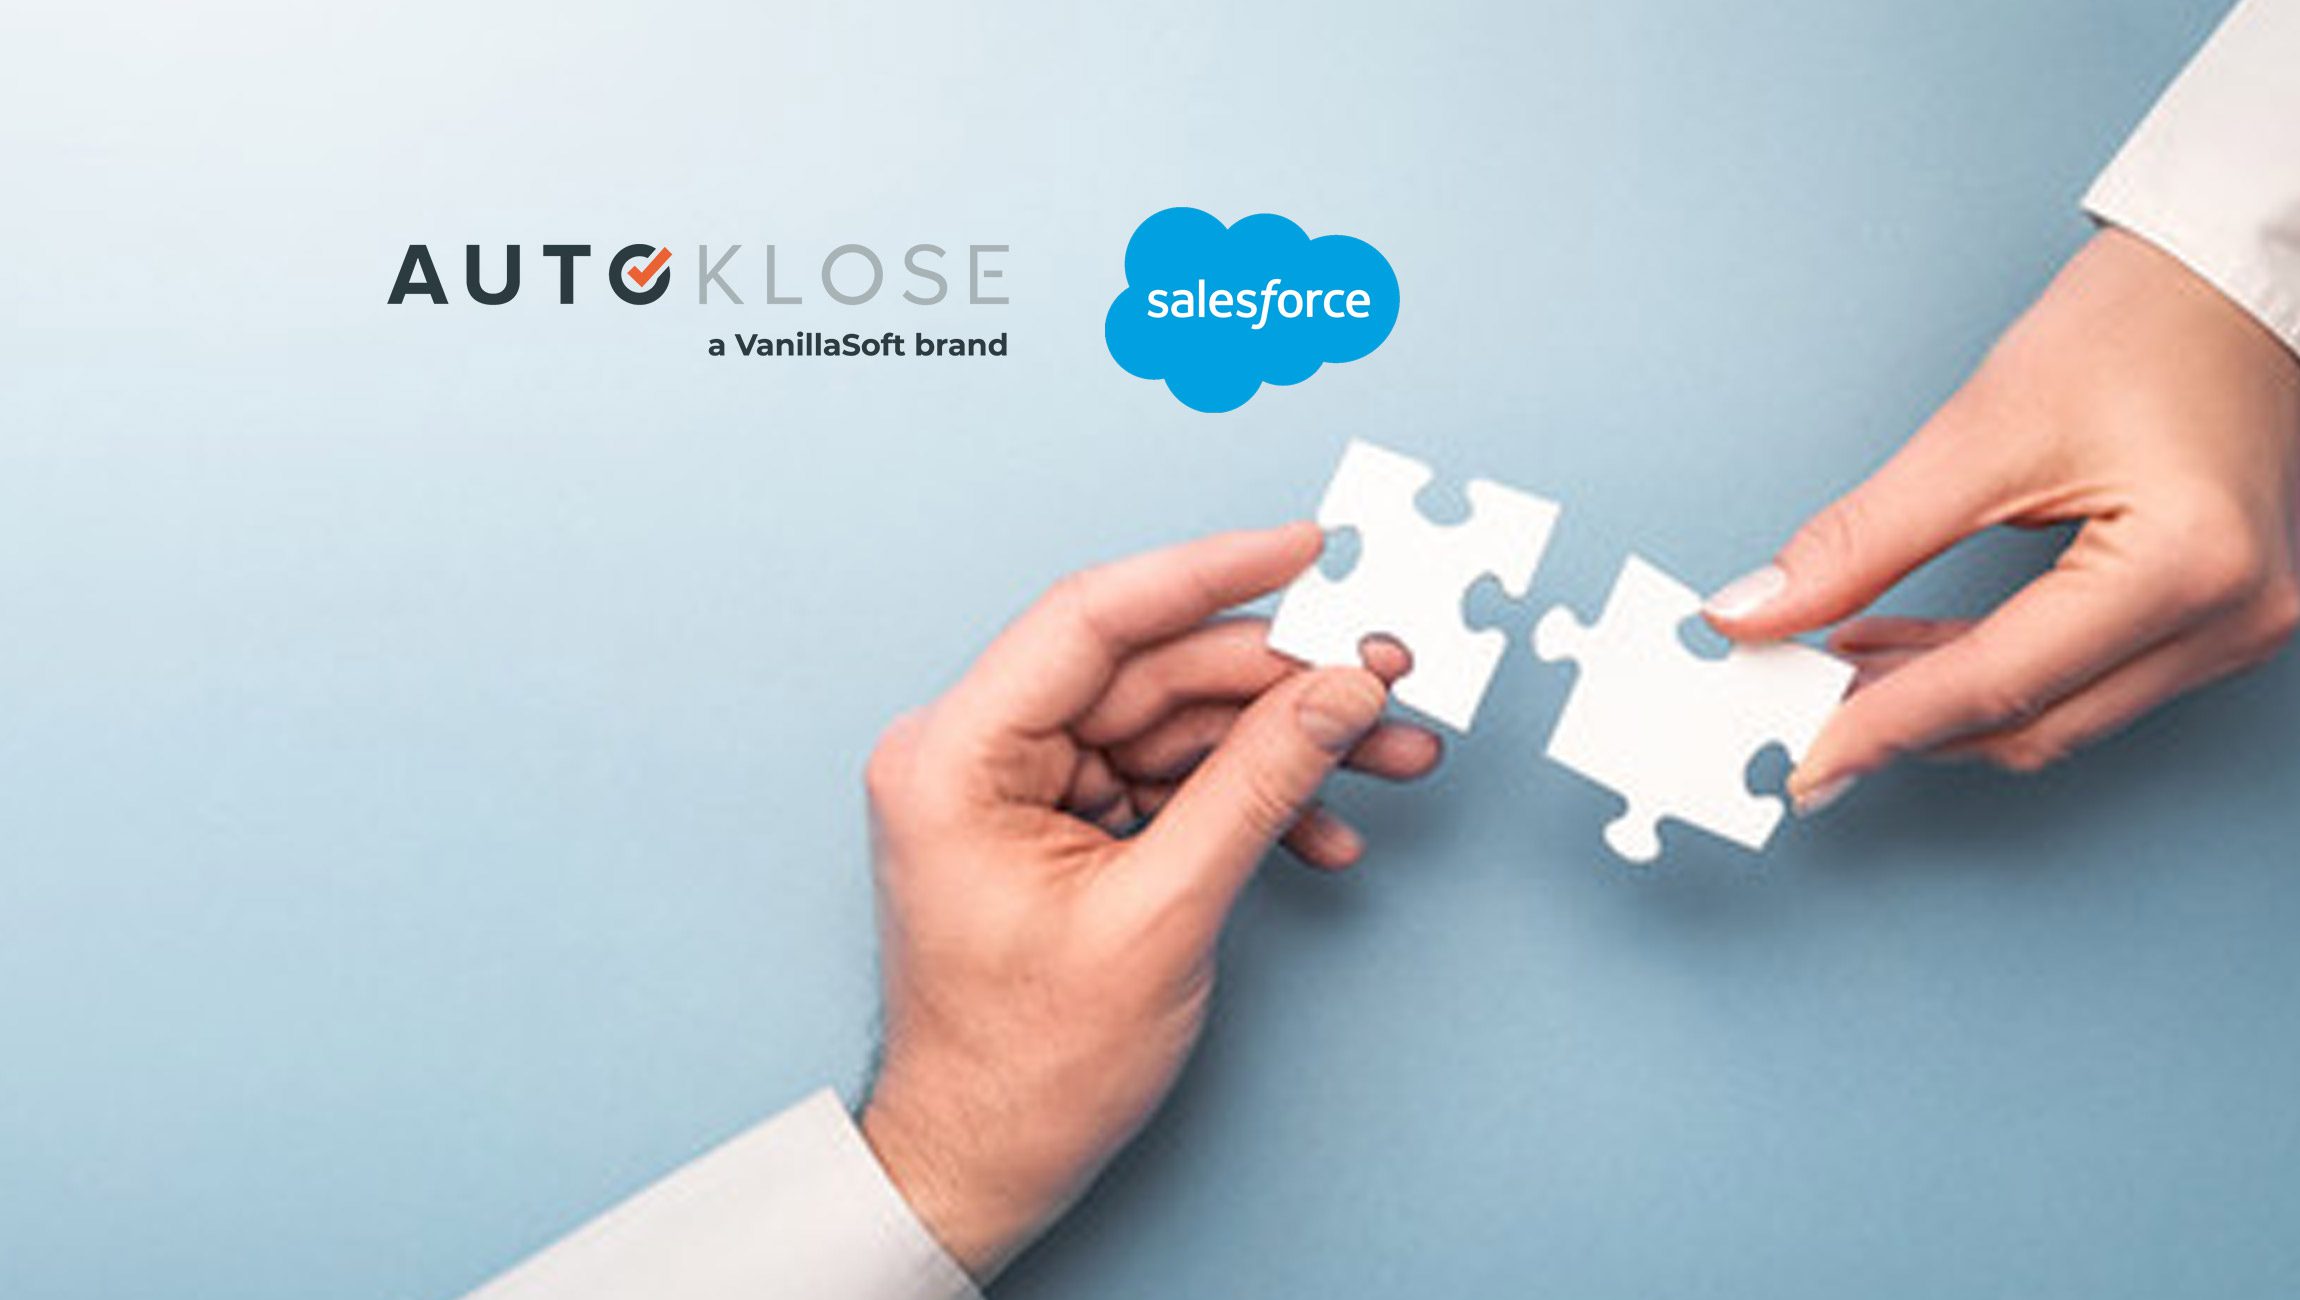 Autoklose Announces Integration with Salesforce